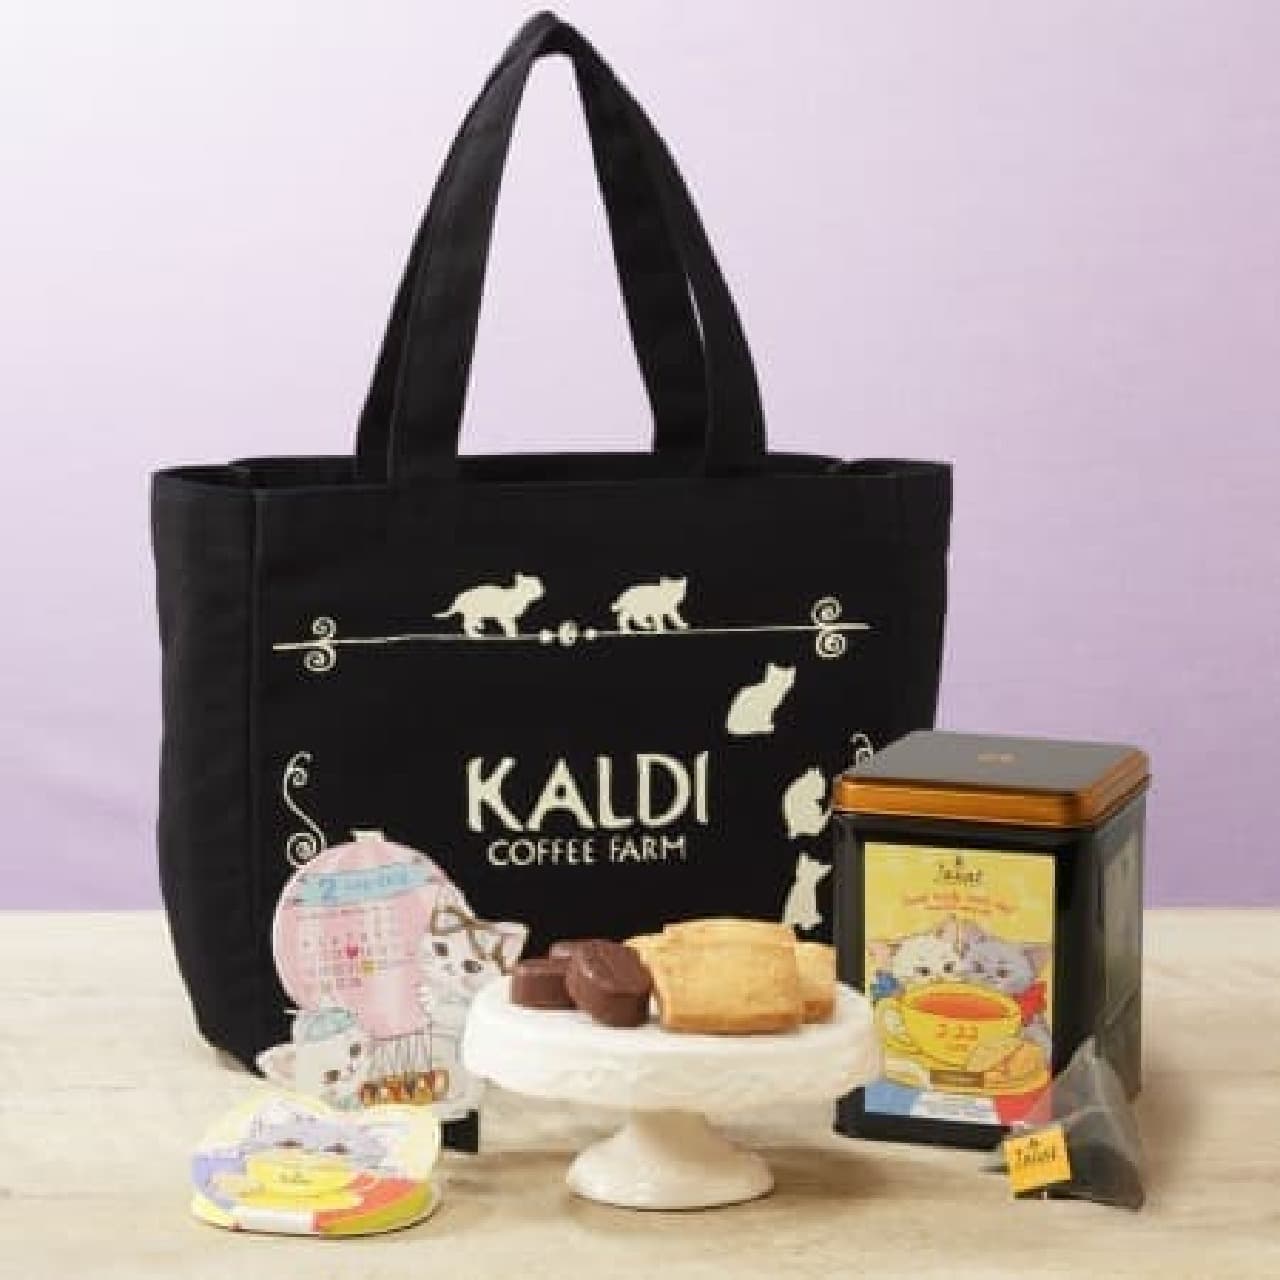 KALDI Coffee Farm "Cat's Day Bag"